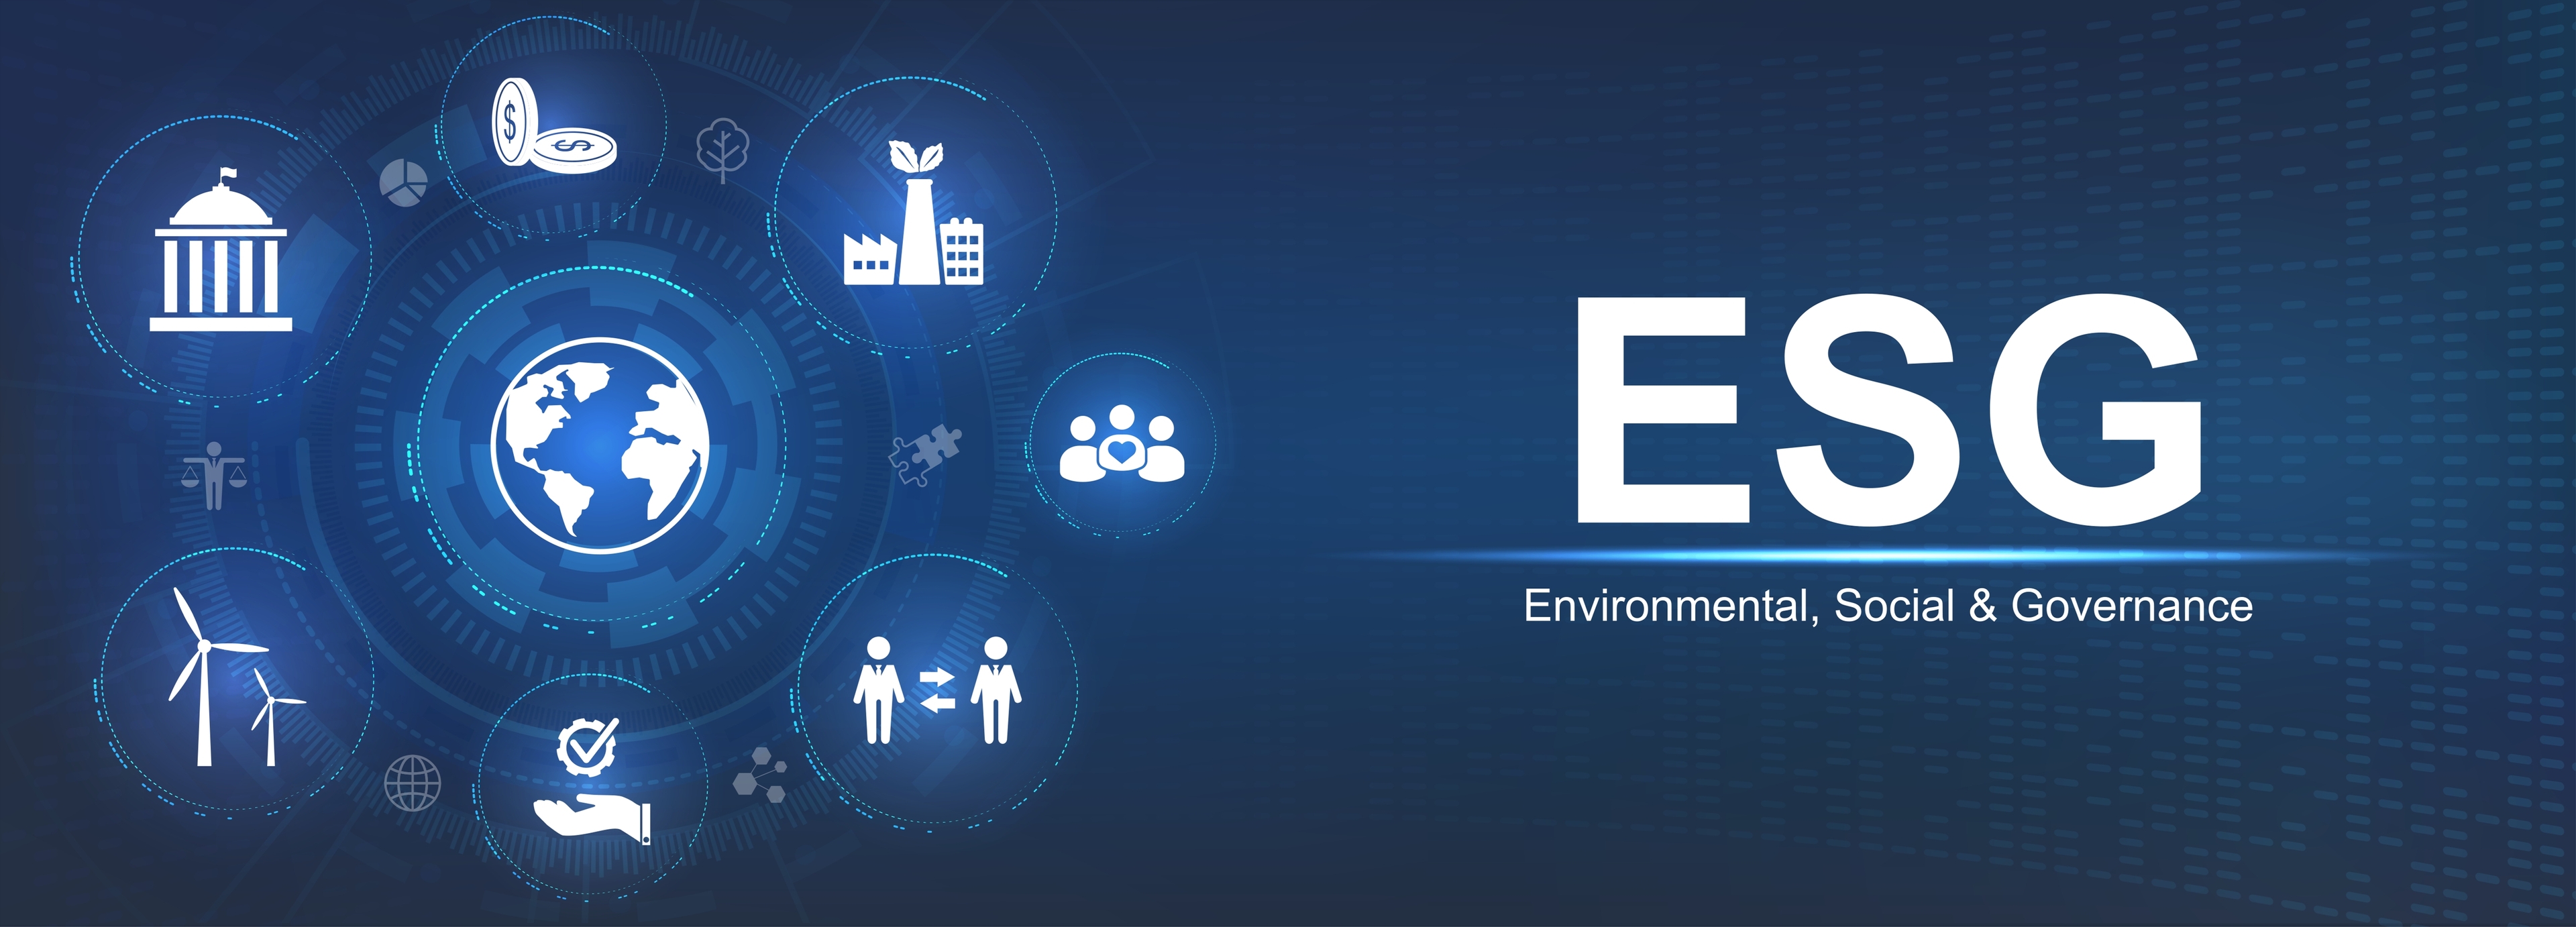 ecossistema ESG(Environmental Social Governance)